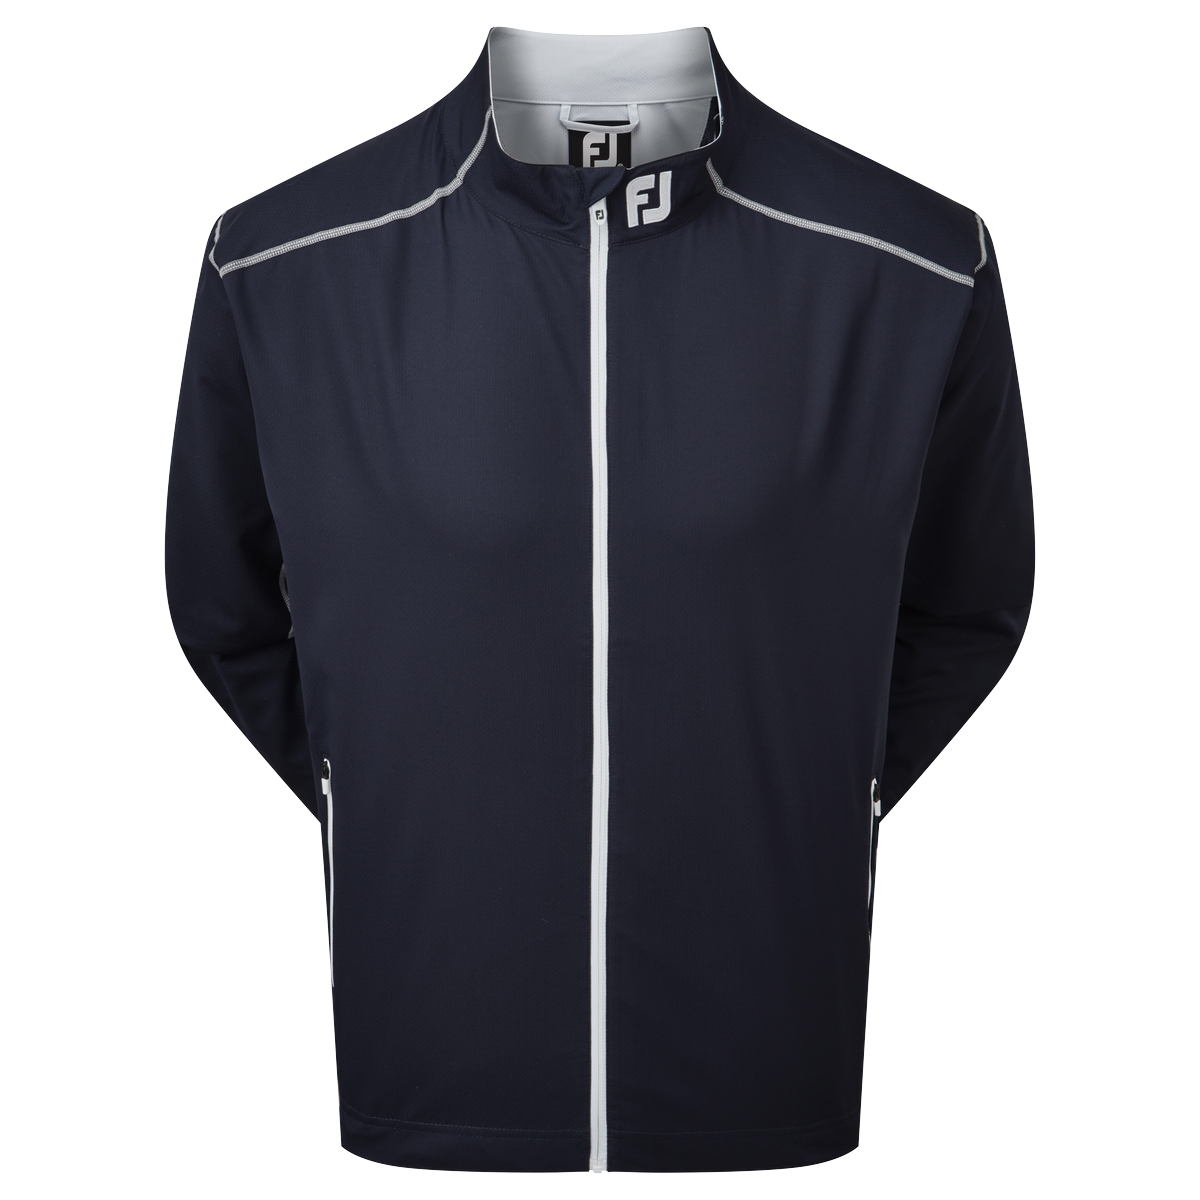 FootJoy EU FJ Full Zip Wind Shirt Jacket  - Navy/White